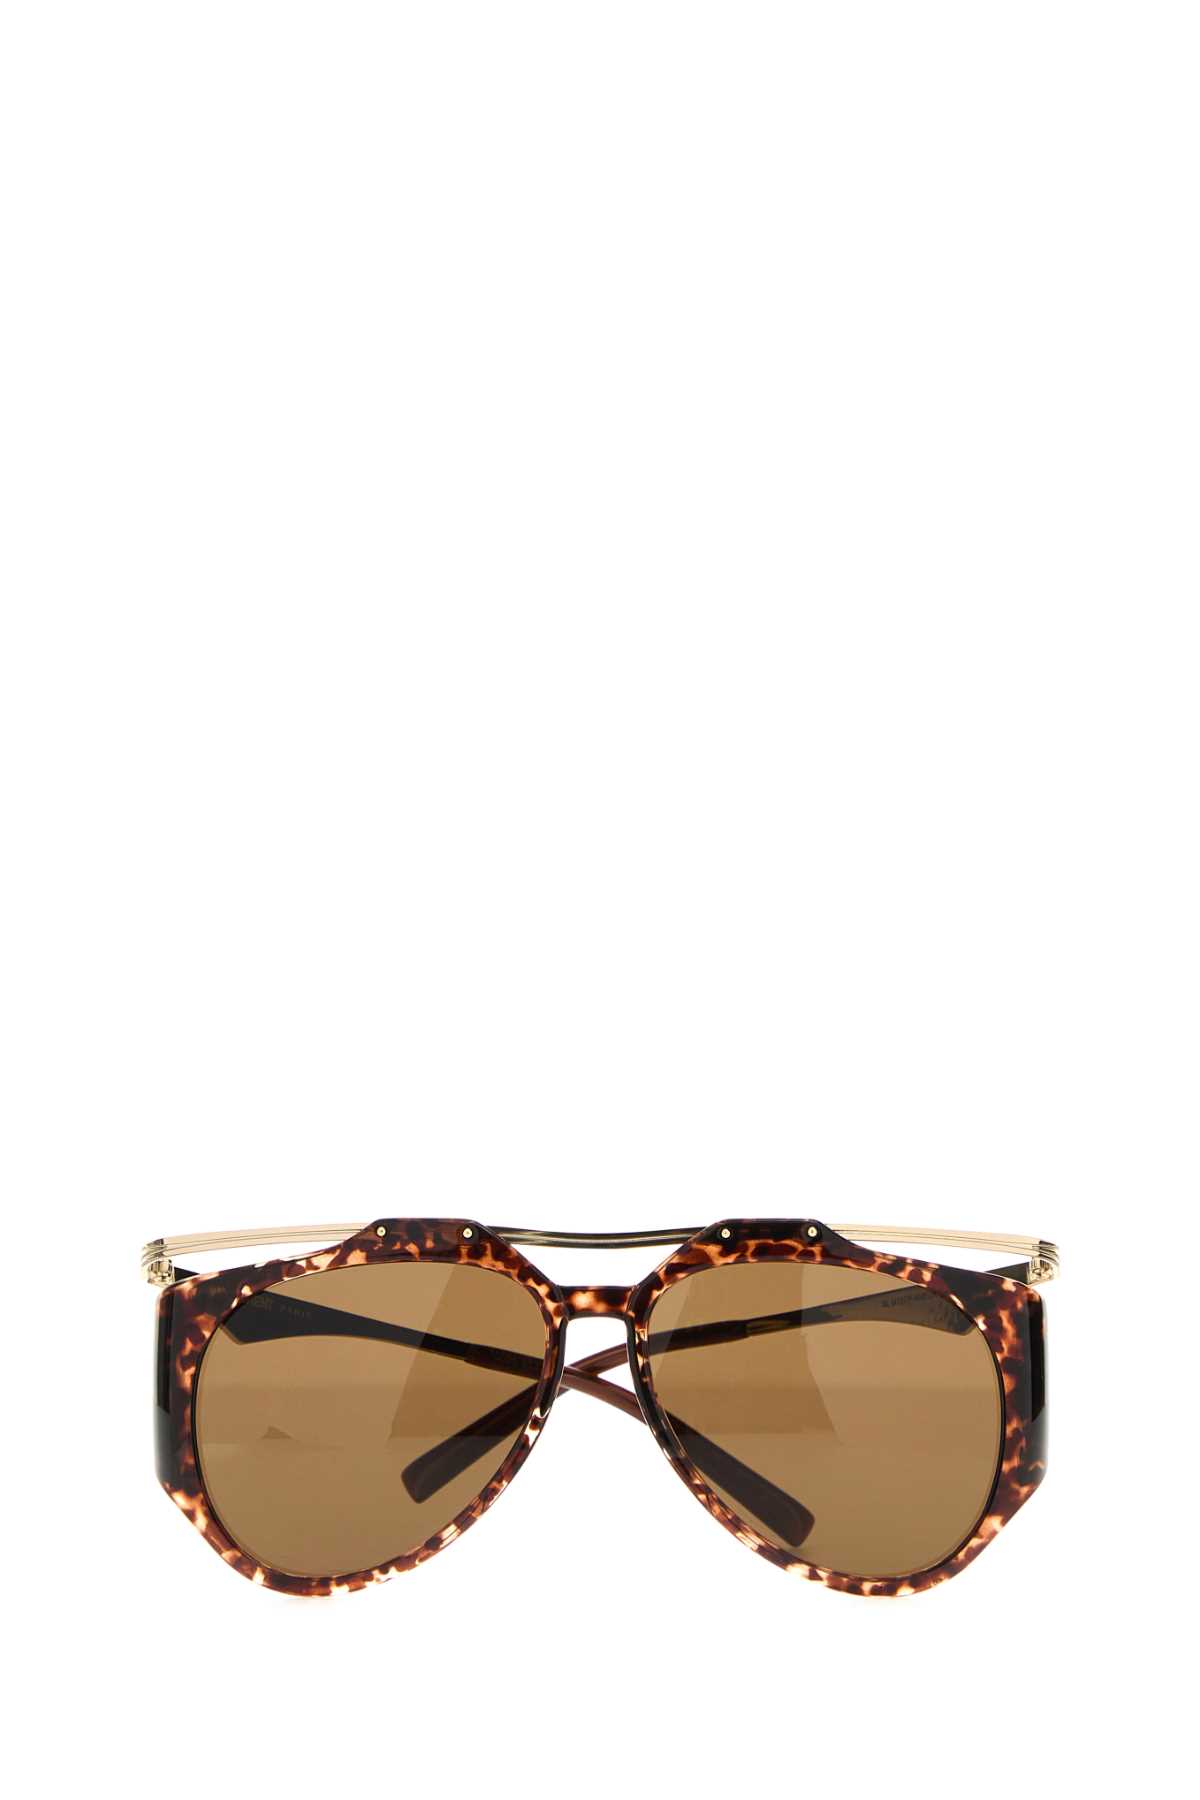 Shop Saint Laurent Printed Acetate M137 Amelia Sunglasses In Havanagoldbrown